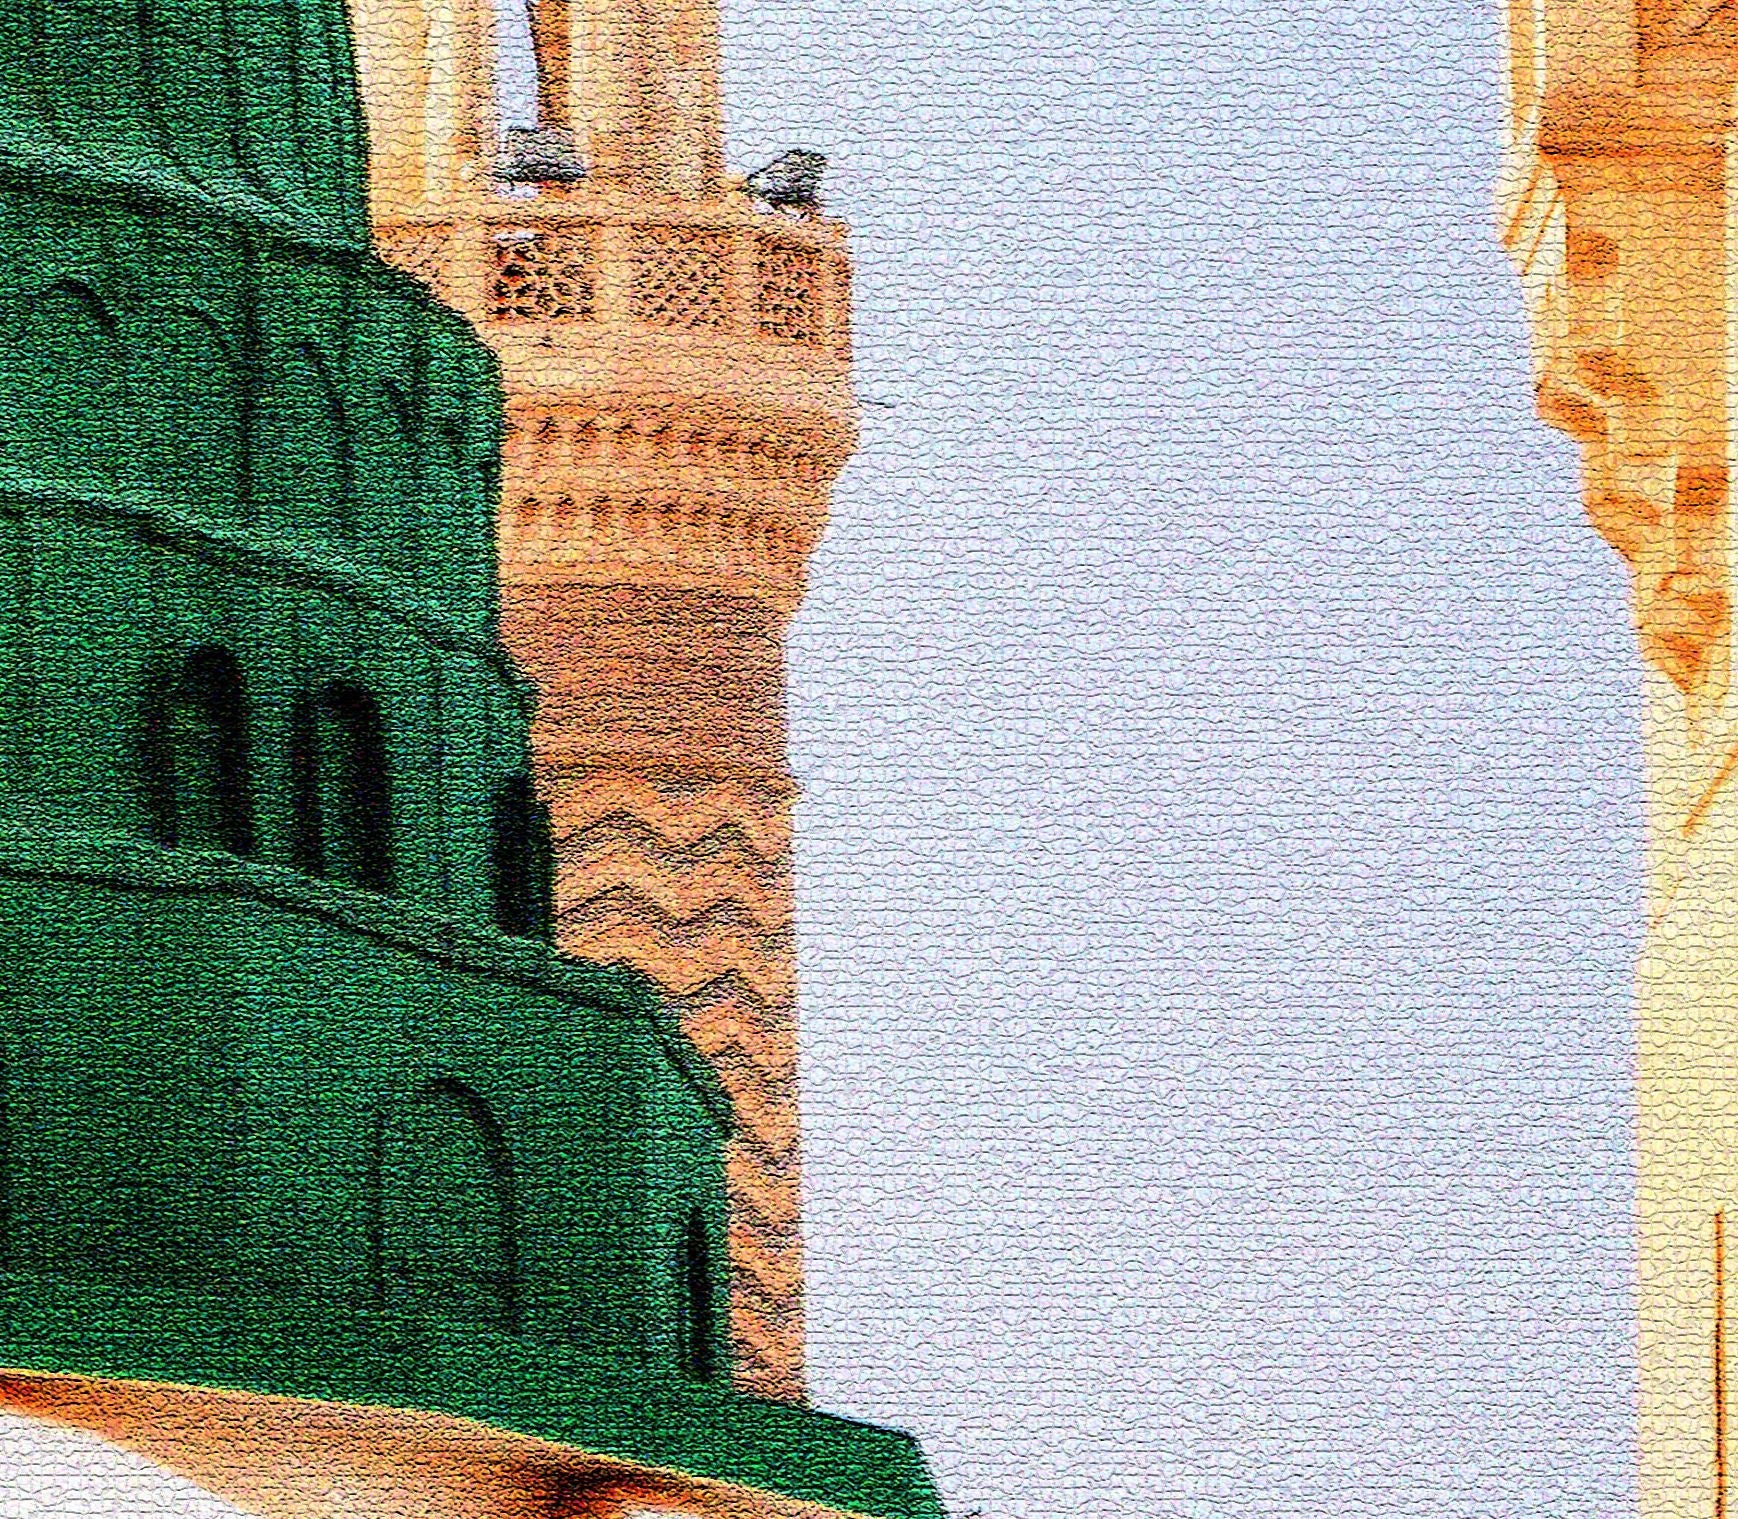 Great Mosque of Medina-Framed Islamic Wall Decor-Giclée Fine Art On Canvas